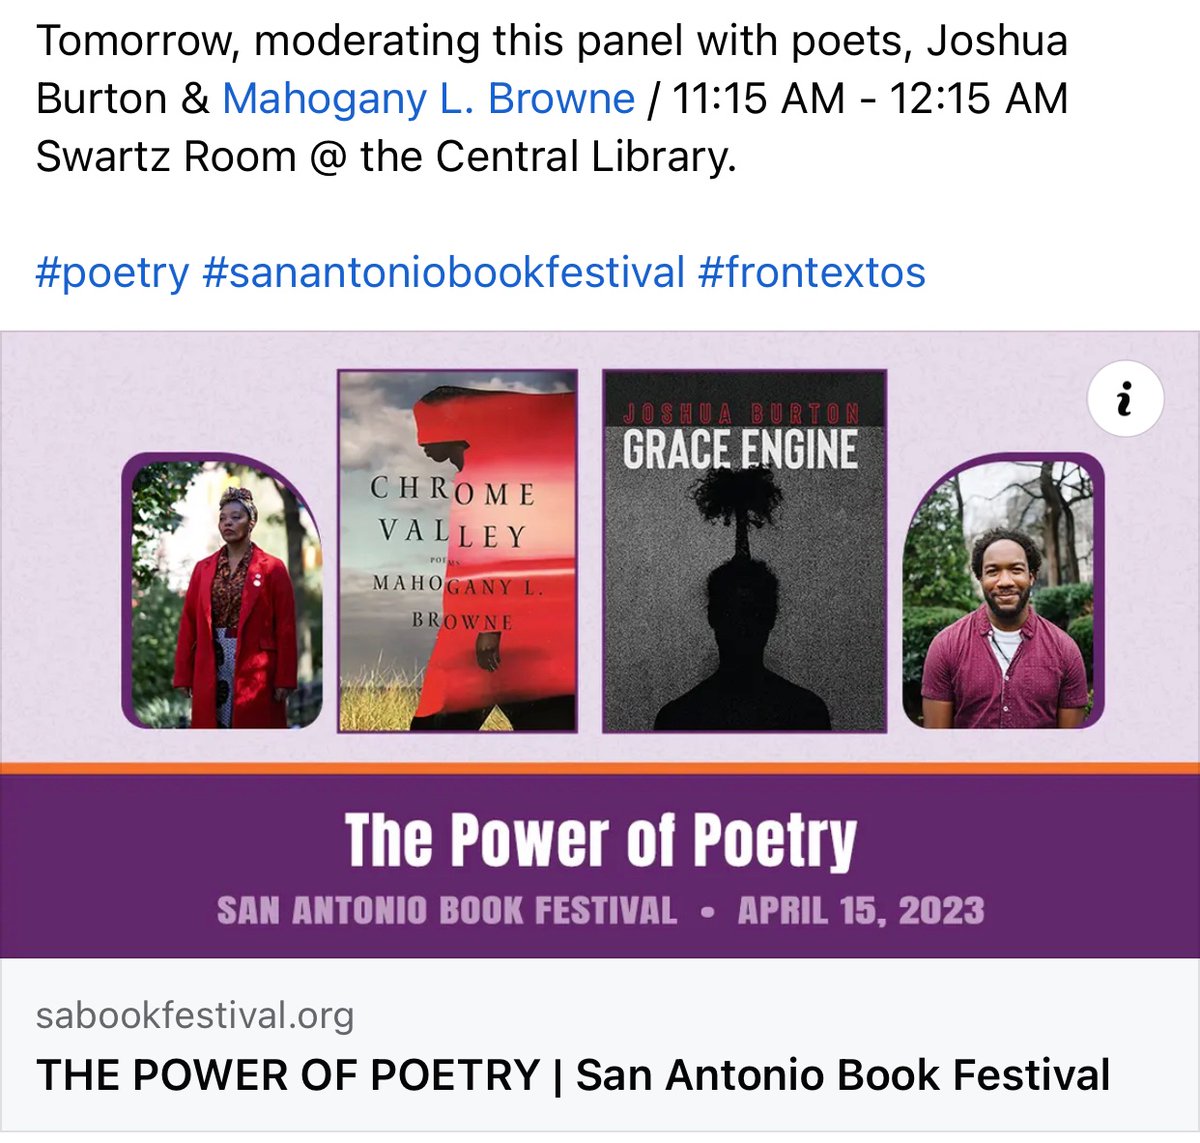 Moderating this panel tomorrow | Joshua Burton | Mahogany L. Browne | @SABookFestival 

#sanantoniobookfestival #poetry #frontextos